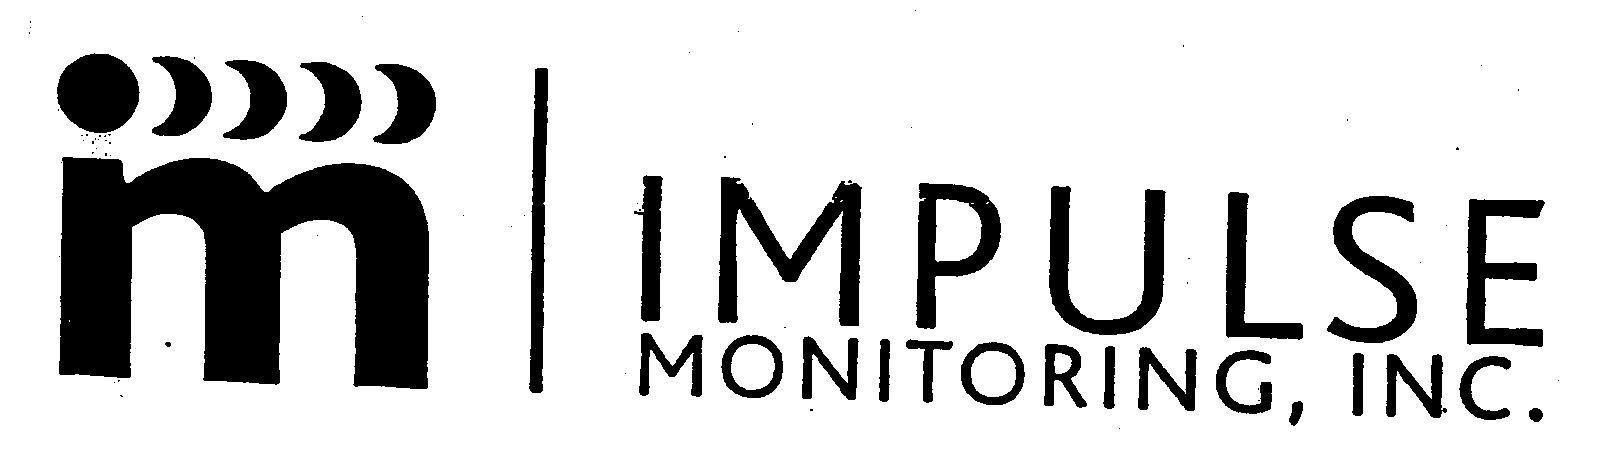  M IMPULSE MONITORING, INC.